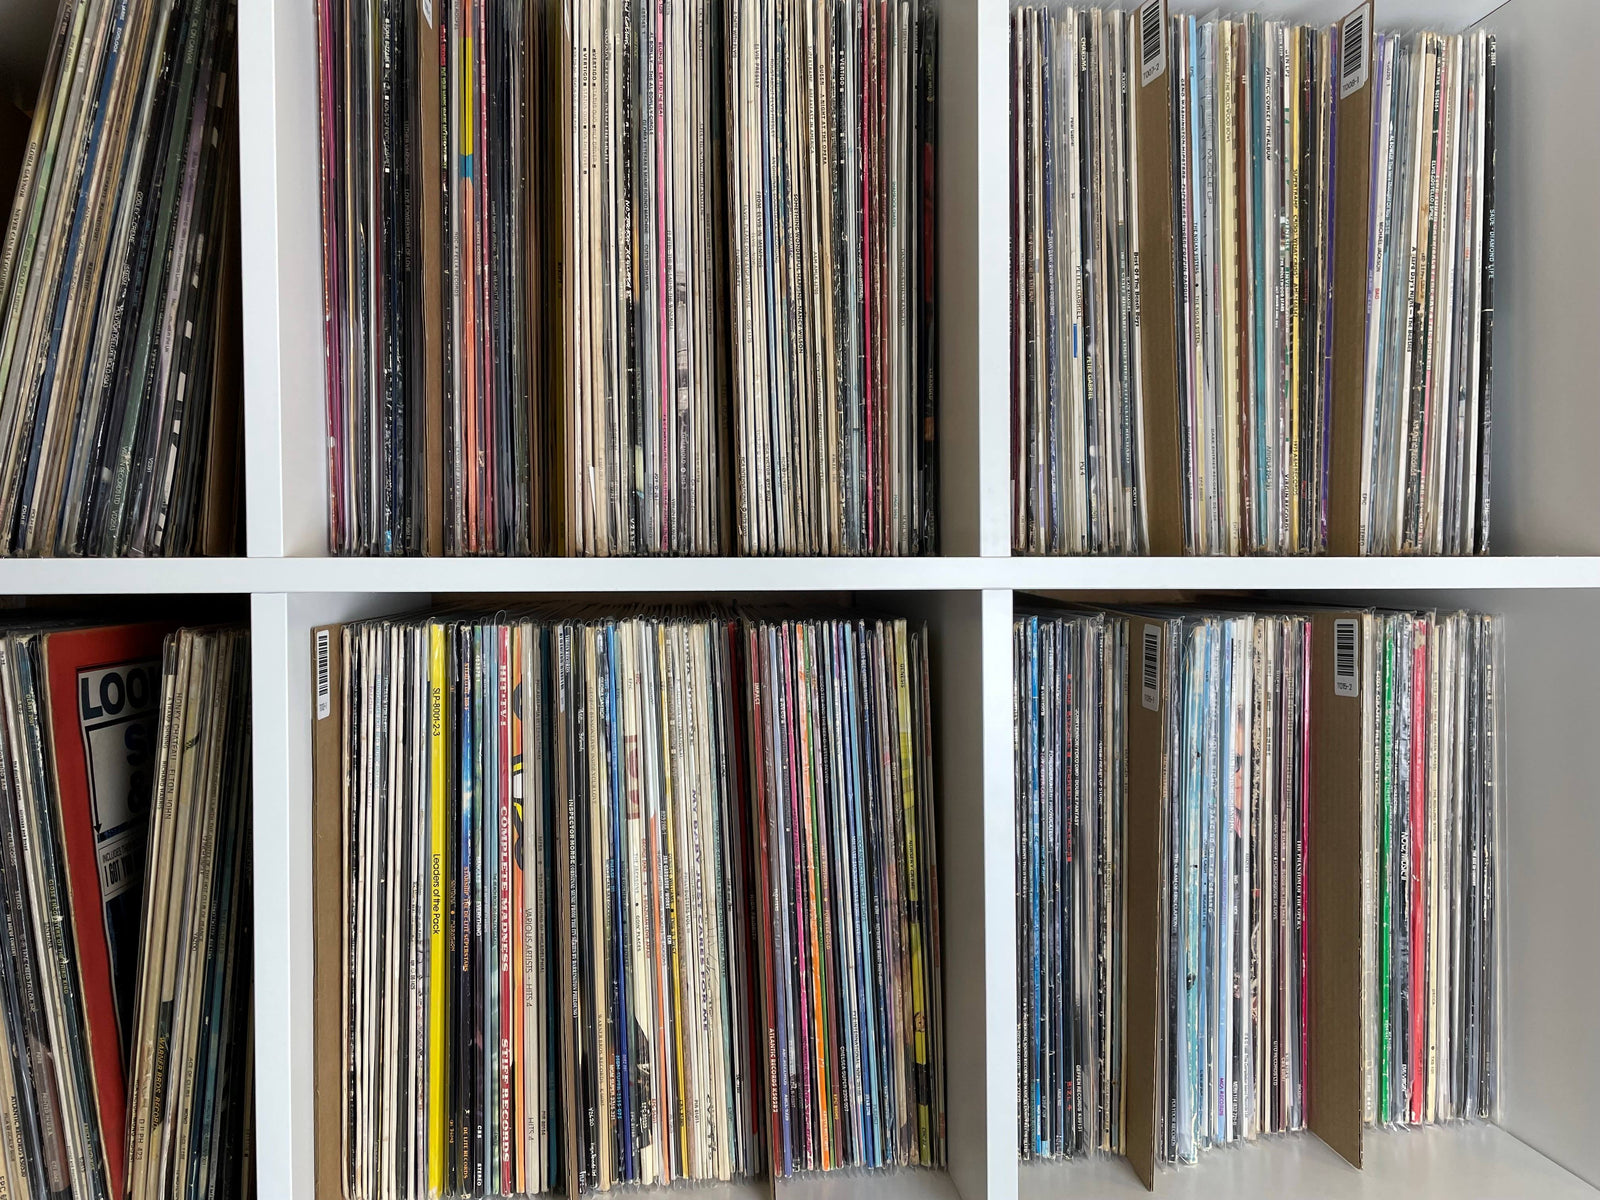 Storing Vinyl Records